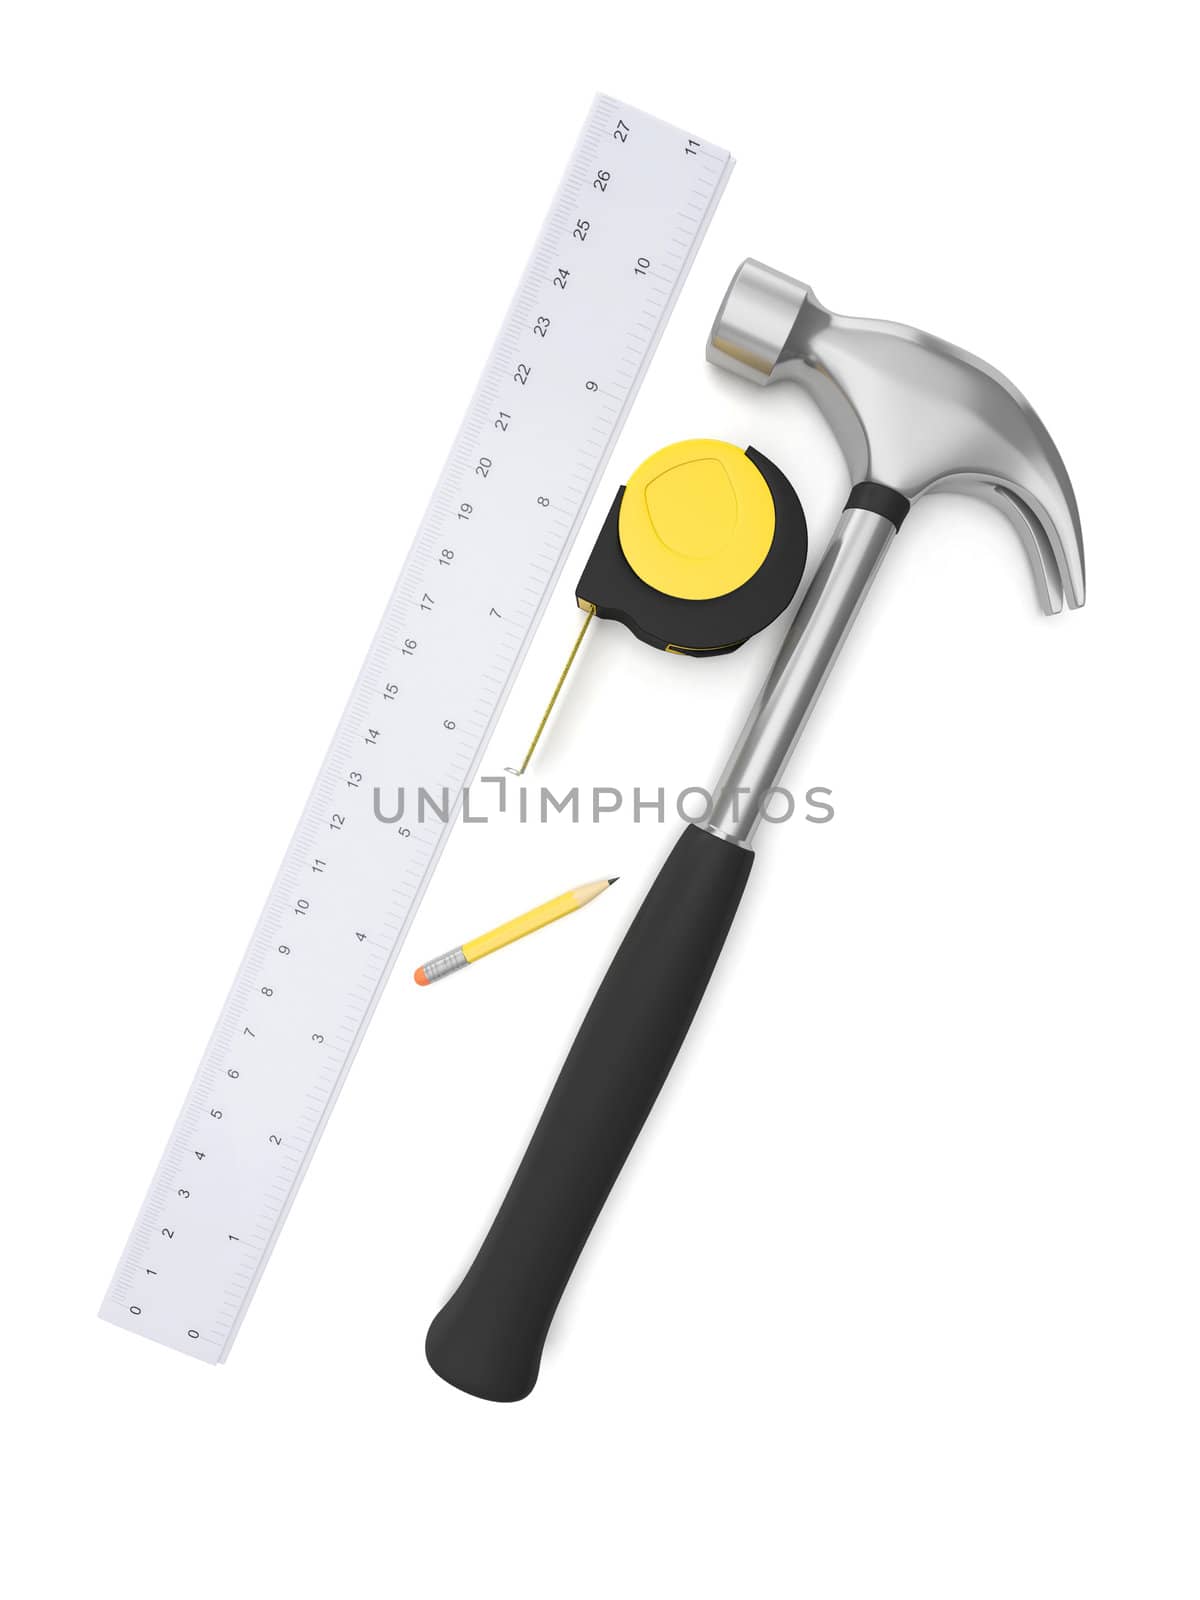 3d illustration: hammer, ruler, pencil on white background